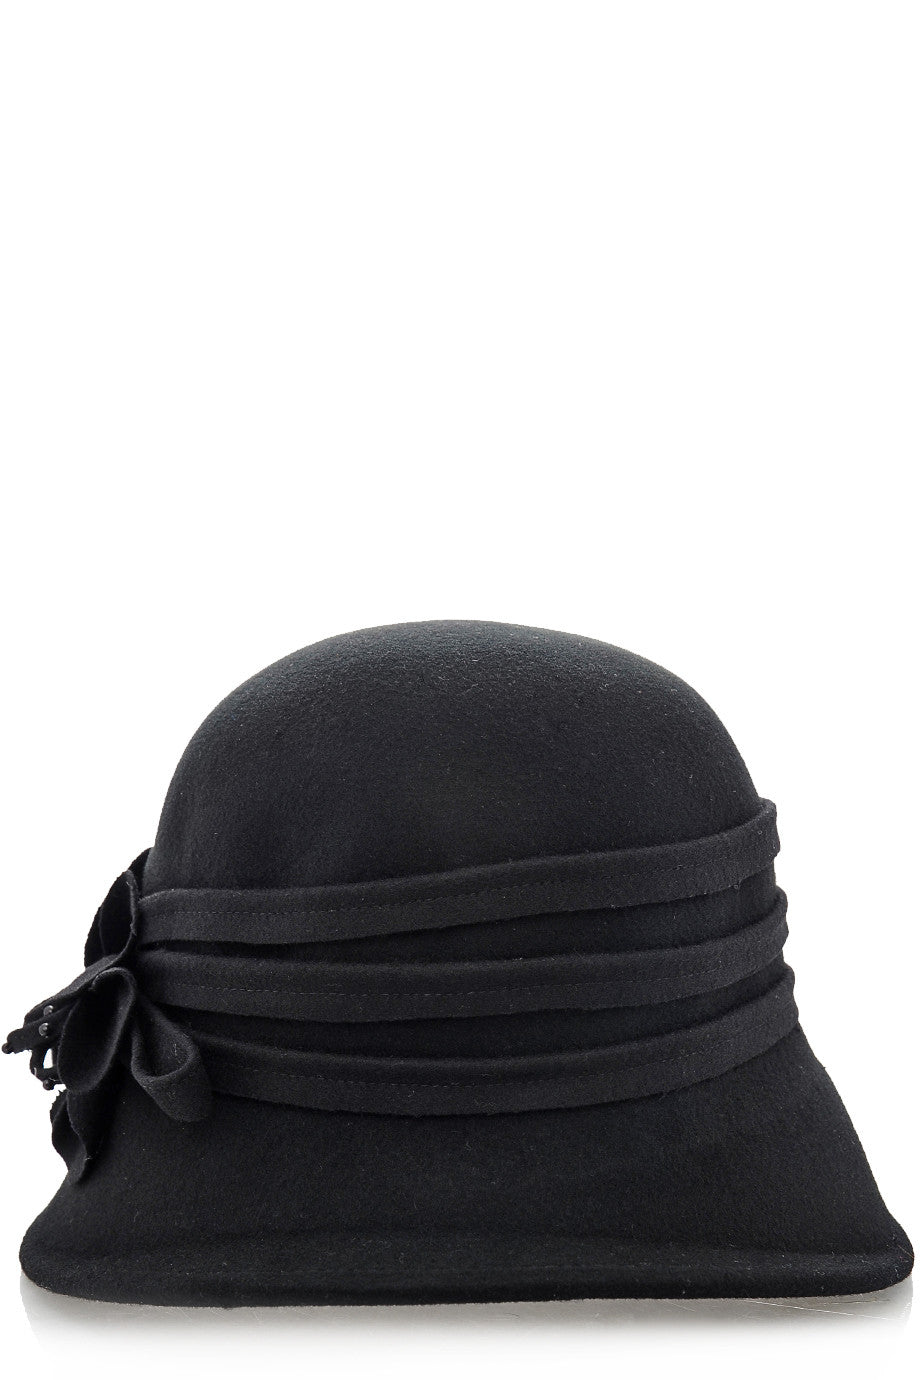 Estella Μαύρο Μάλλινο Καπέλο - LALU | Γυναικεία Καπέλα